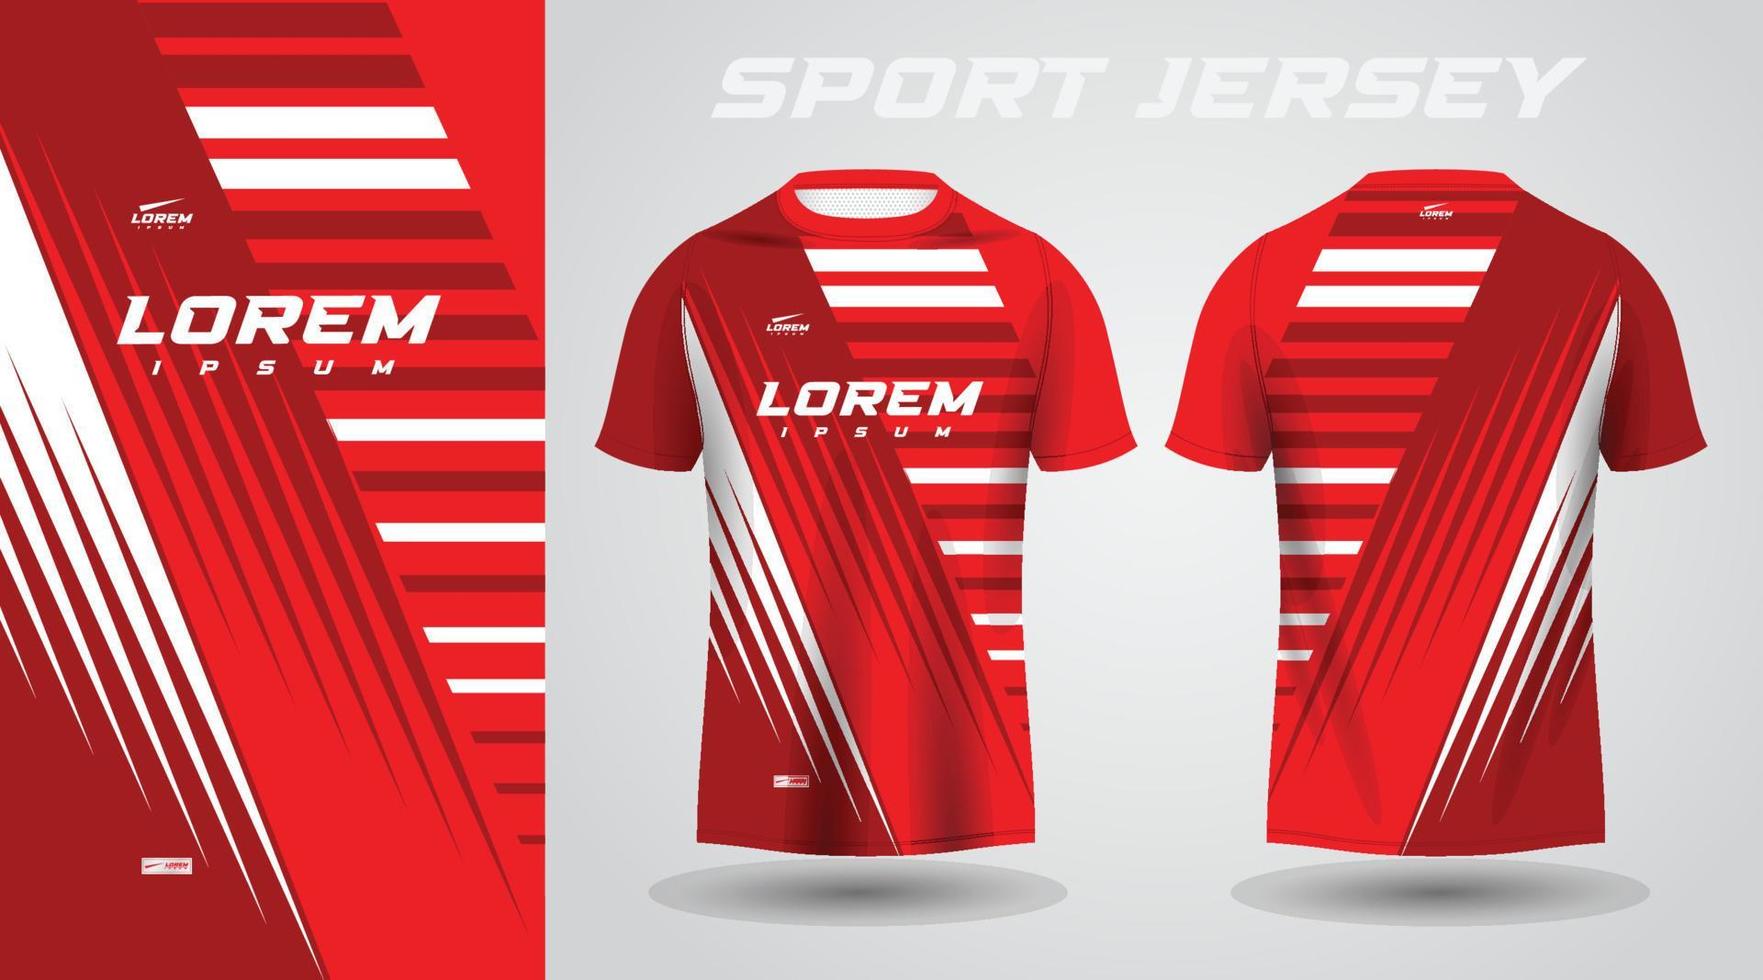 red shirt soccer football sport jersey template design mockup vector